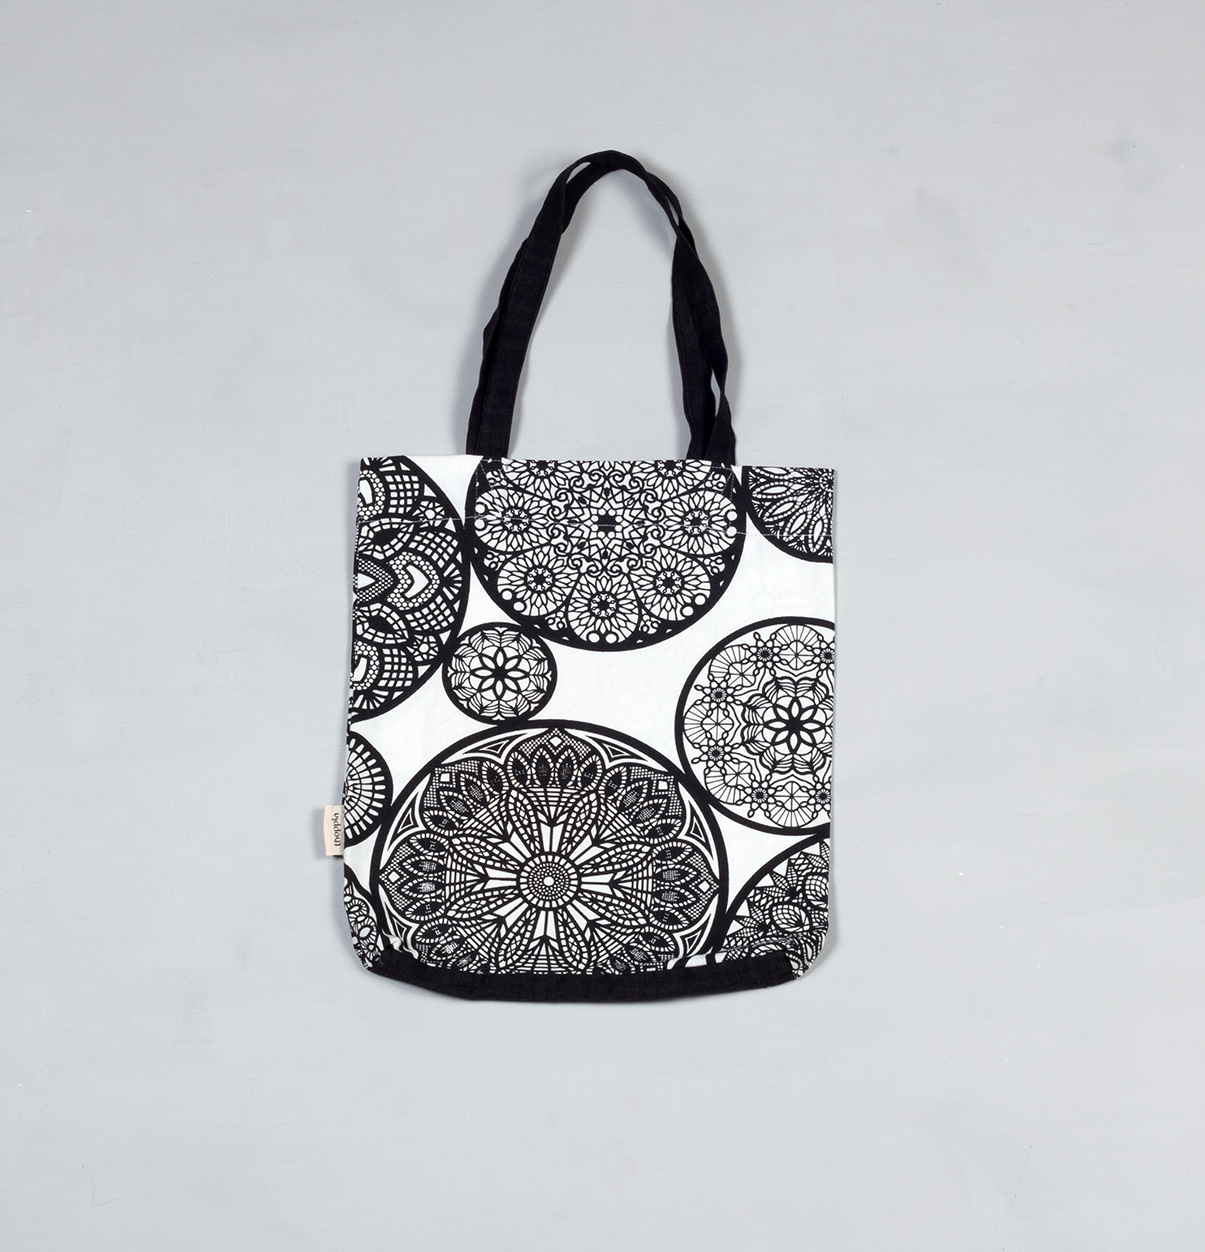 Insect Spider Illustration Black Pattern Handbag Craft Poker Spade Canvas Bag Shopping Tote